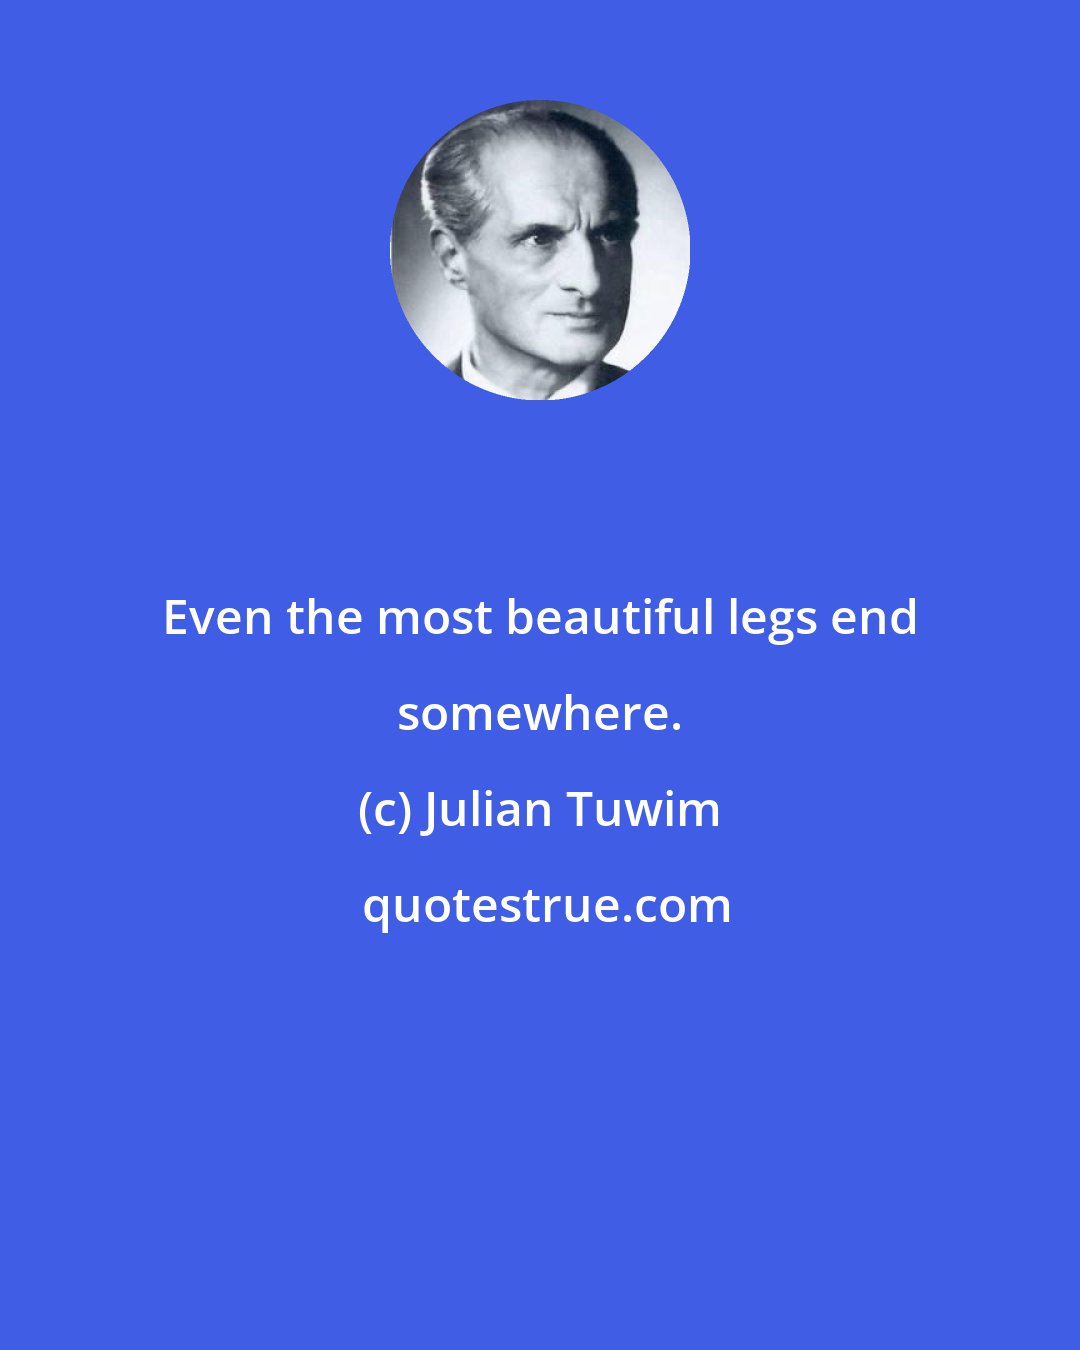 Julian Tuwim: Even the most beautiful legs end somewhere.